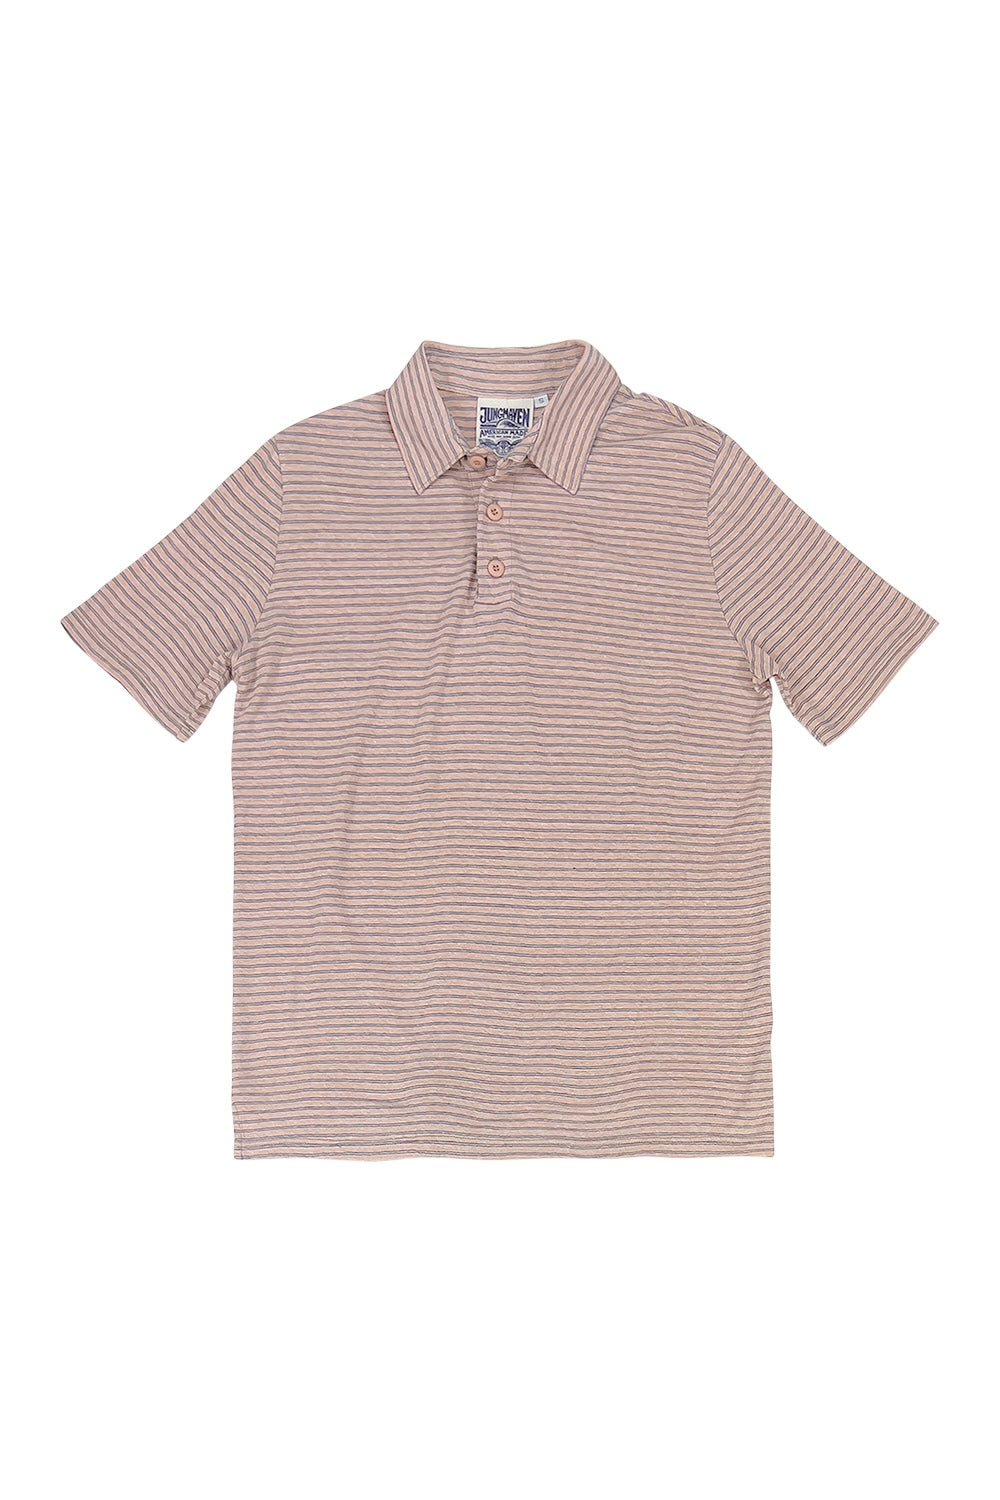 Stripe Camden Polo | Jungmaven Hemp Clothing & Accessories / Color: Pink/Blue/Canvas Thin Stripe